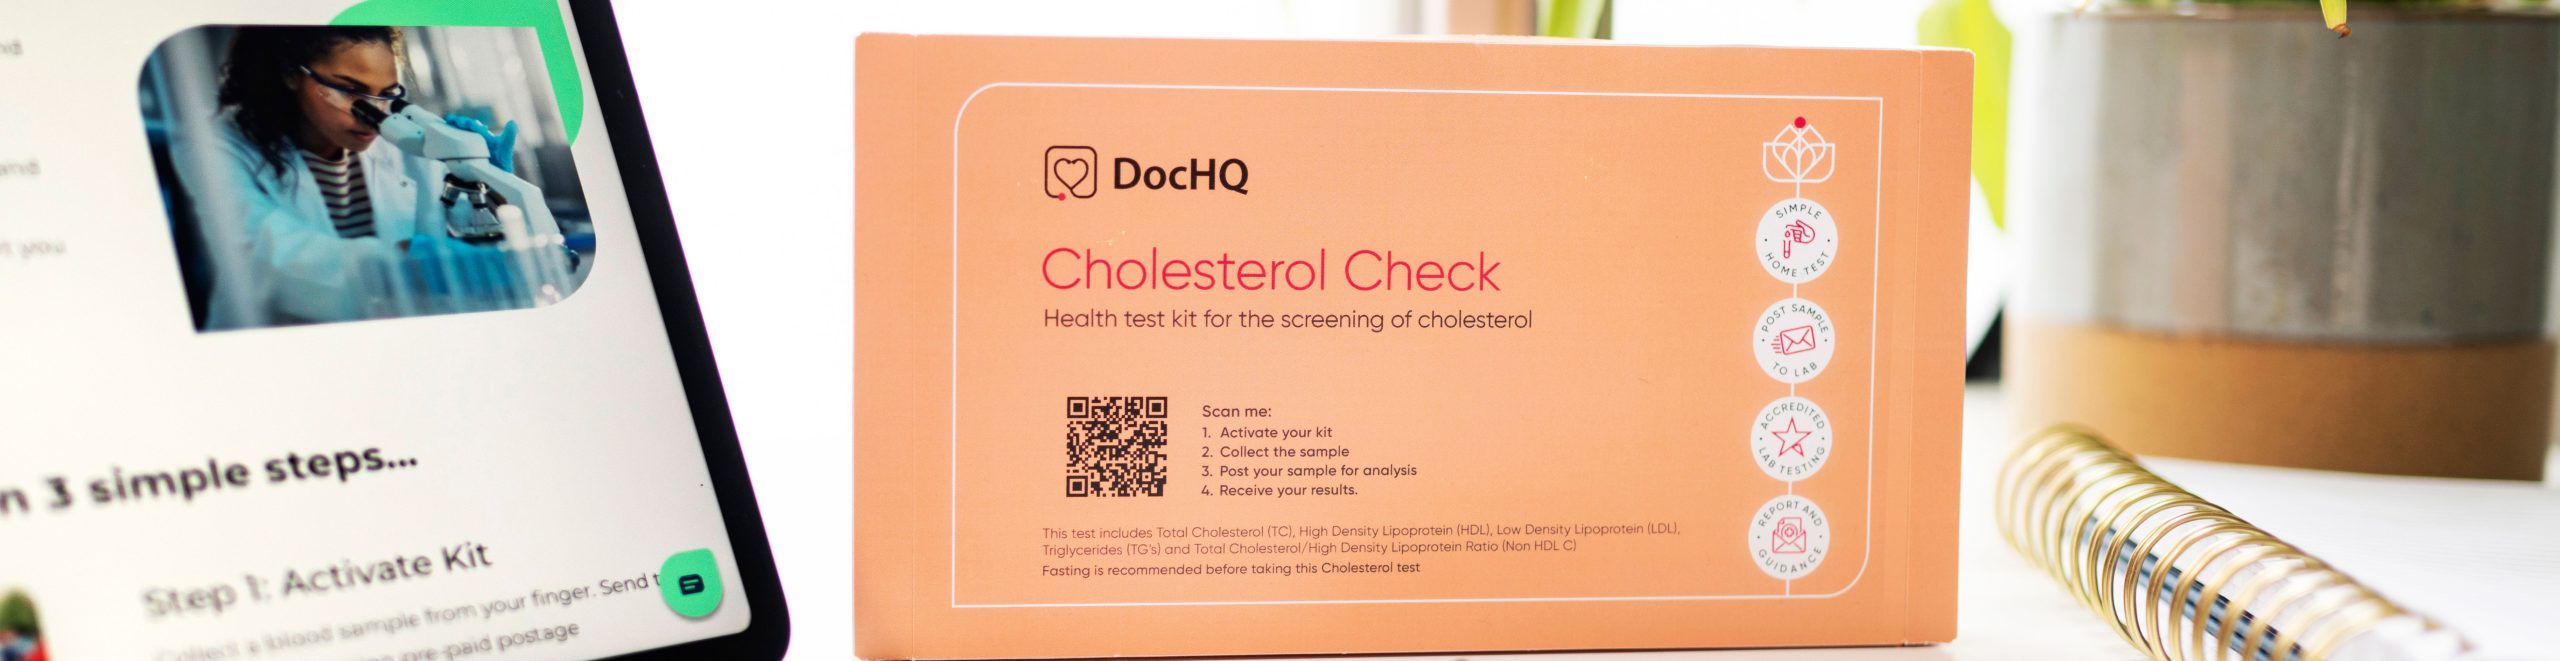 DocHQ Cholesterol Check